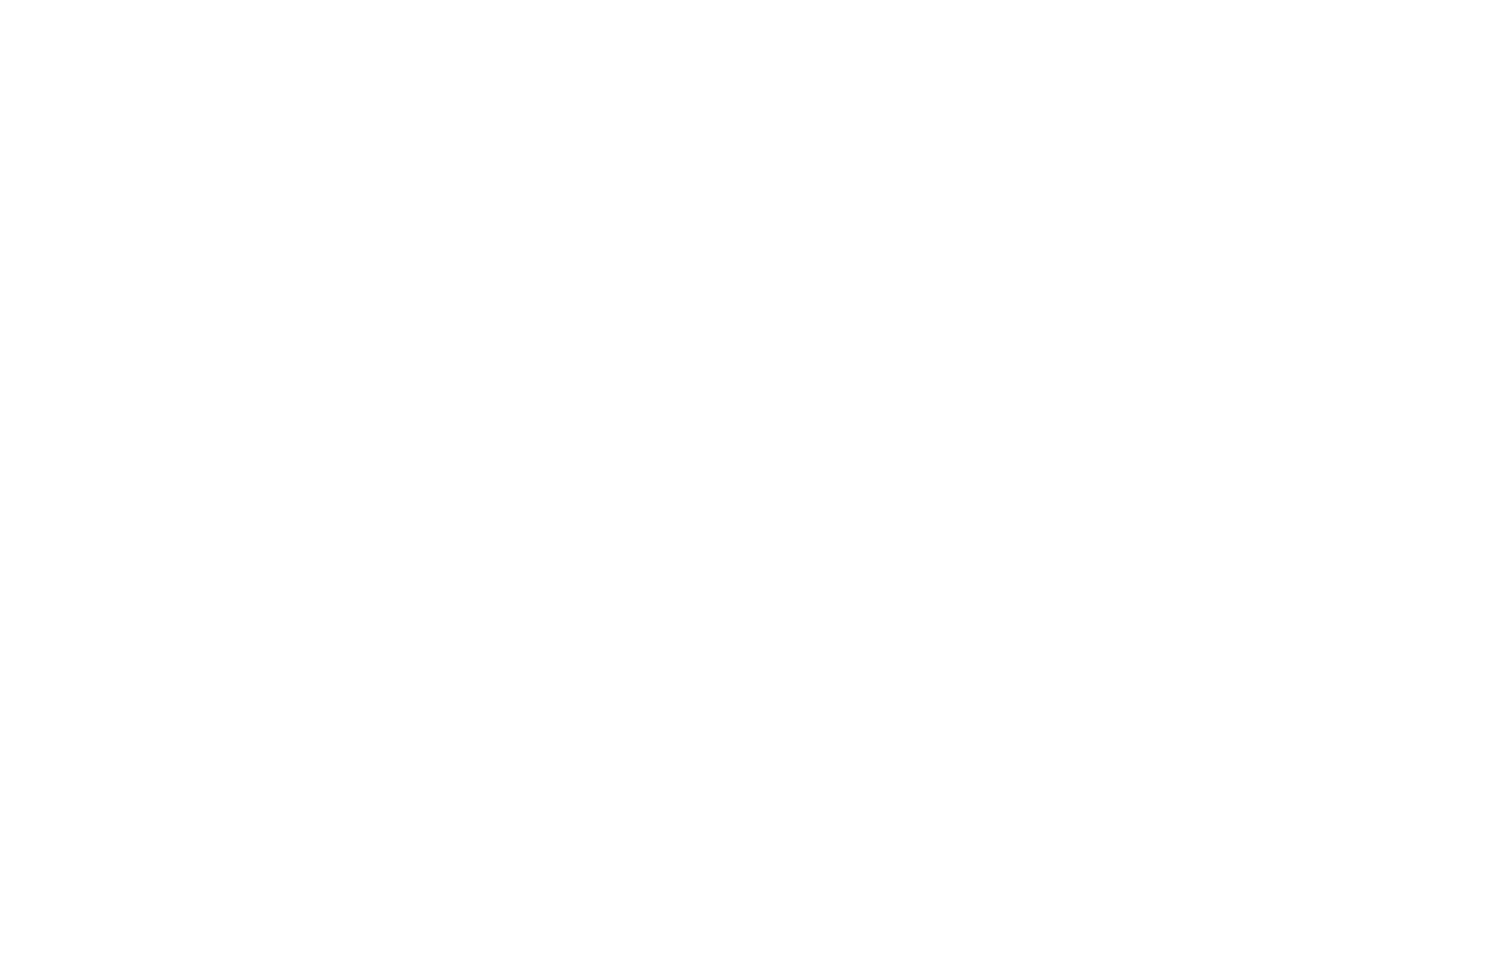 Chicago Butcher Block